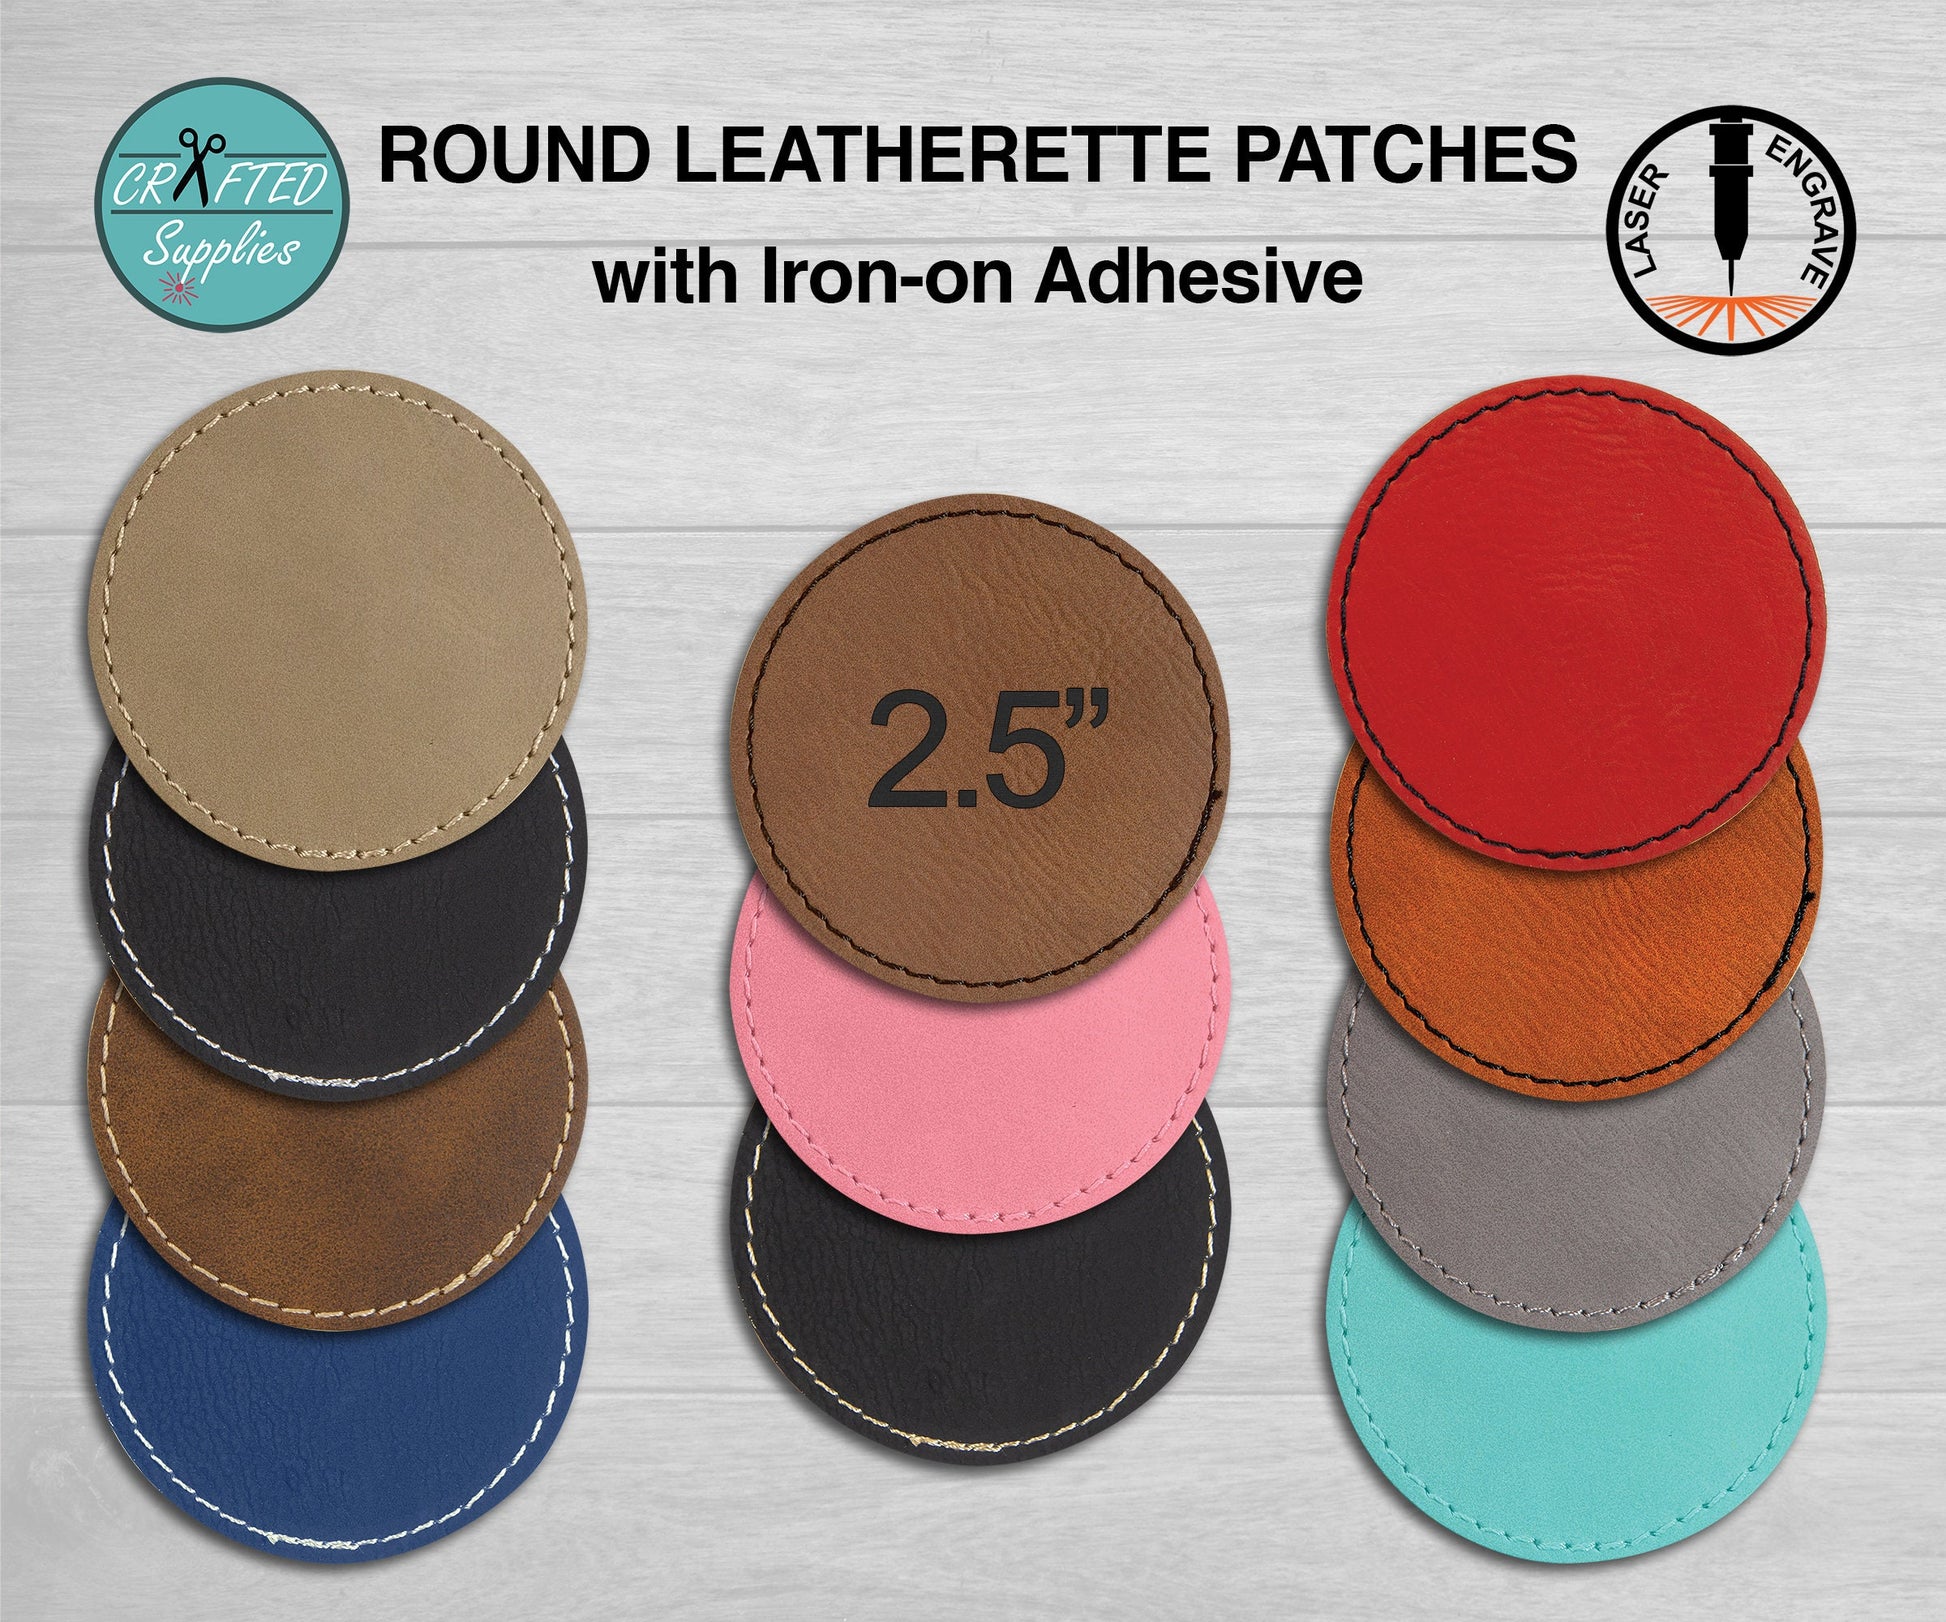 Sheet Stock w/Adhesive Backing, Laserable Leatherette, 12 x 18